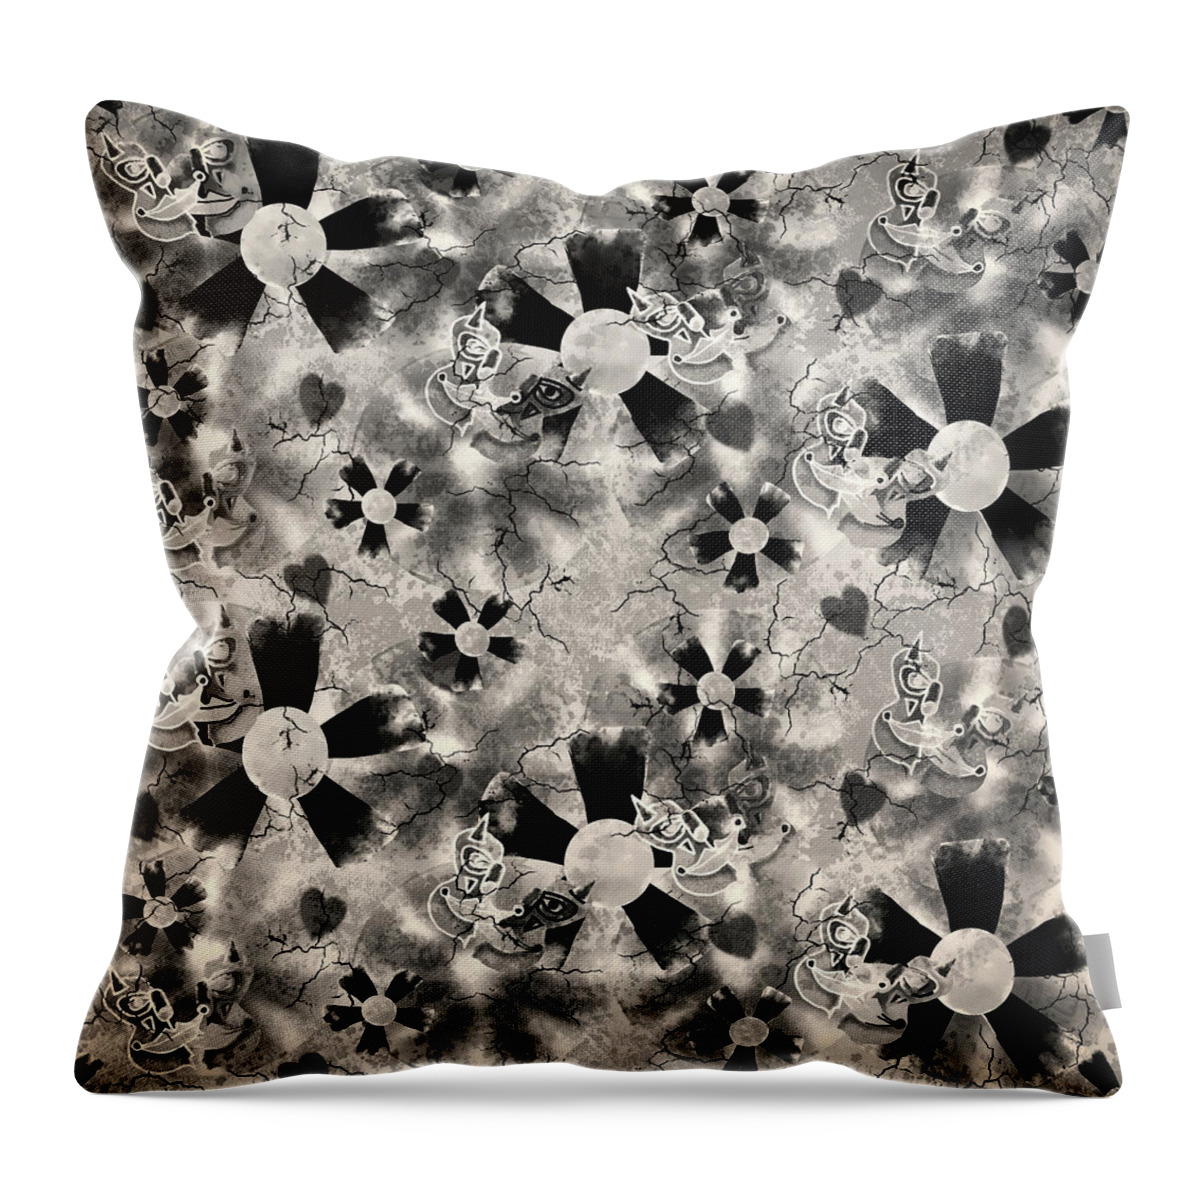 Black Throw Pillow featuring the digital art Flower Clown Pattern in Black by April Burton